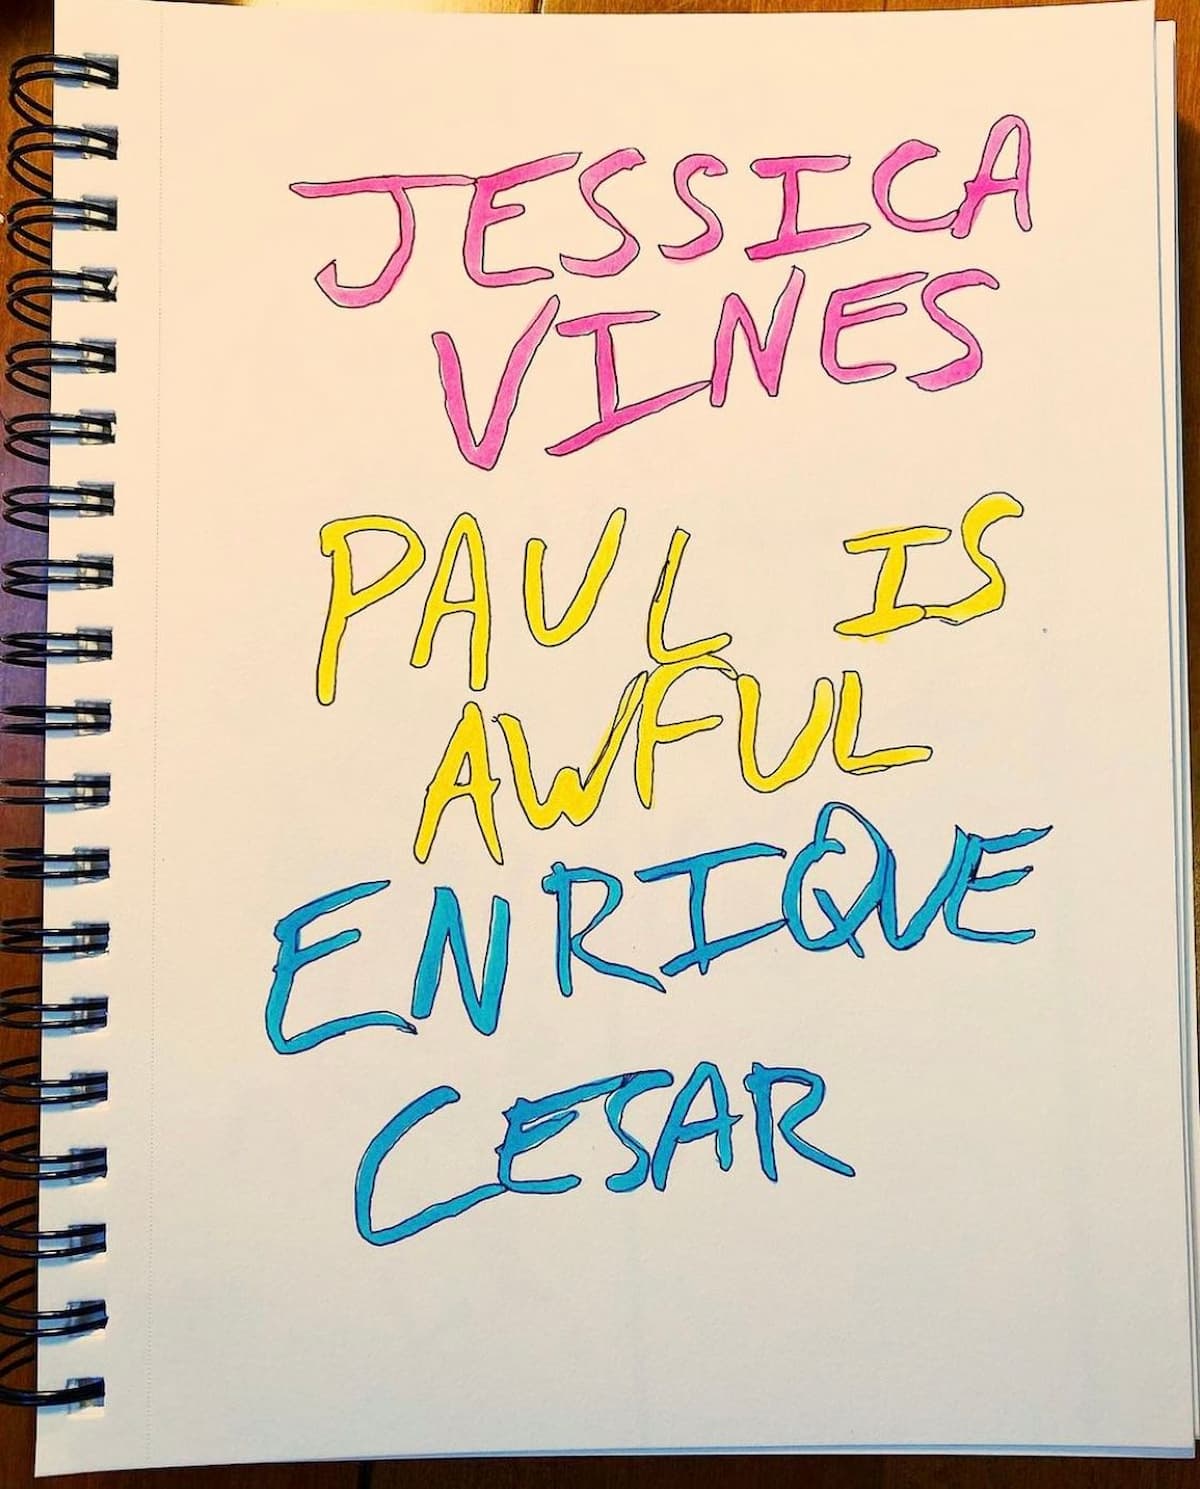 Jessica Vines / Paul is Awful / Enrique Cesar